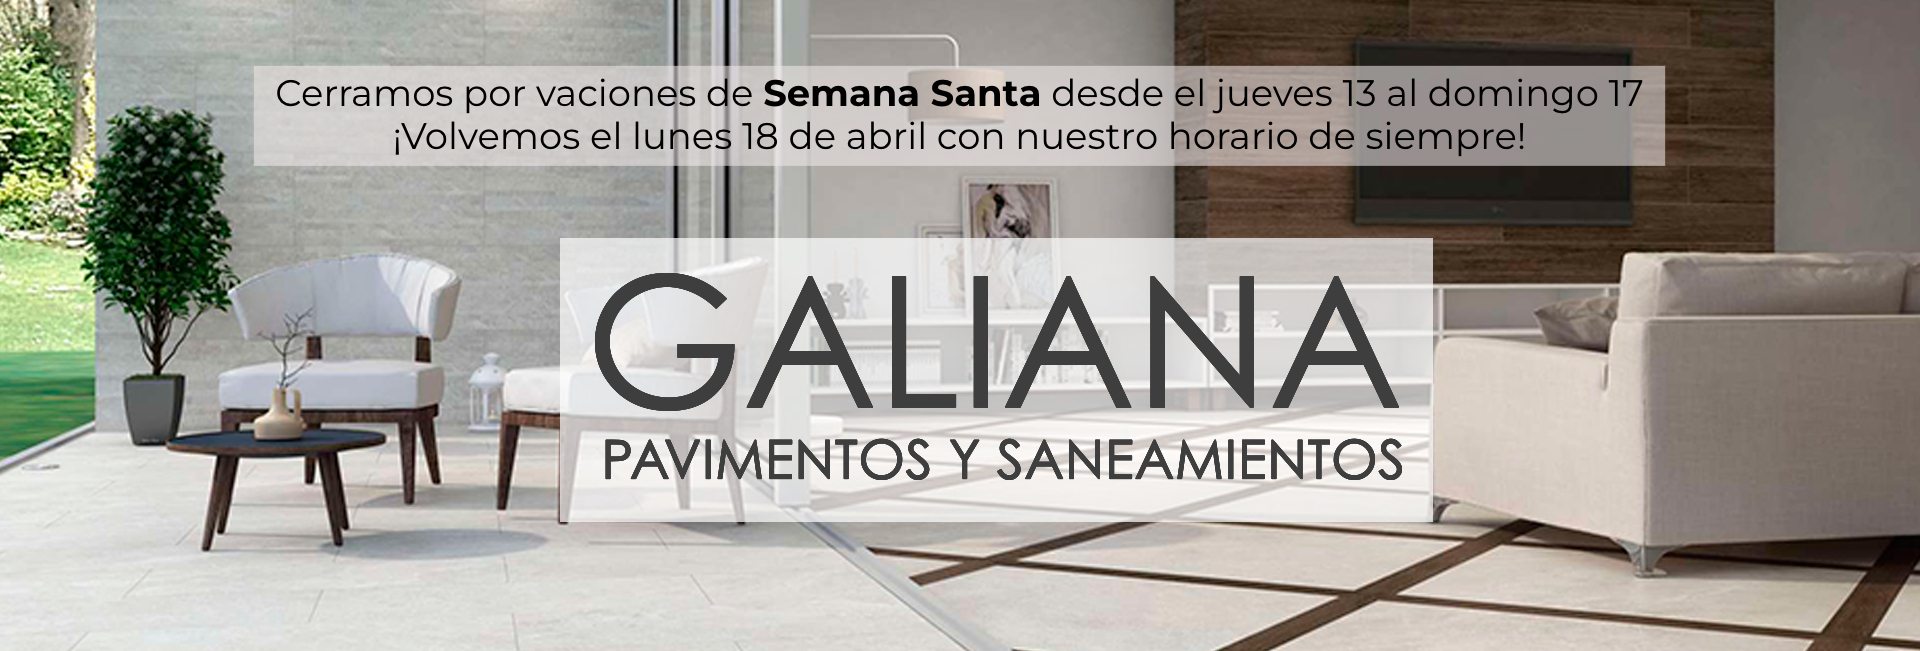 slider1_Galiana SEMANA SANTA (1)